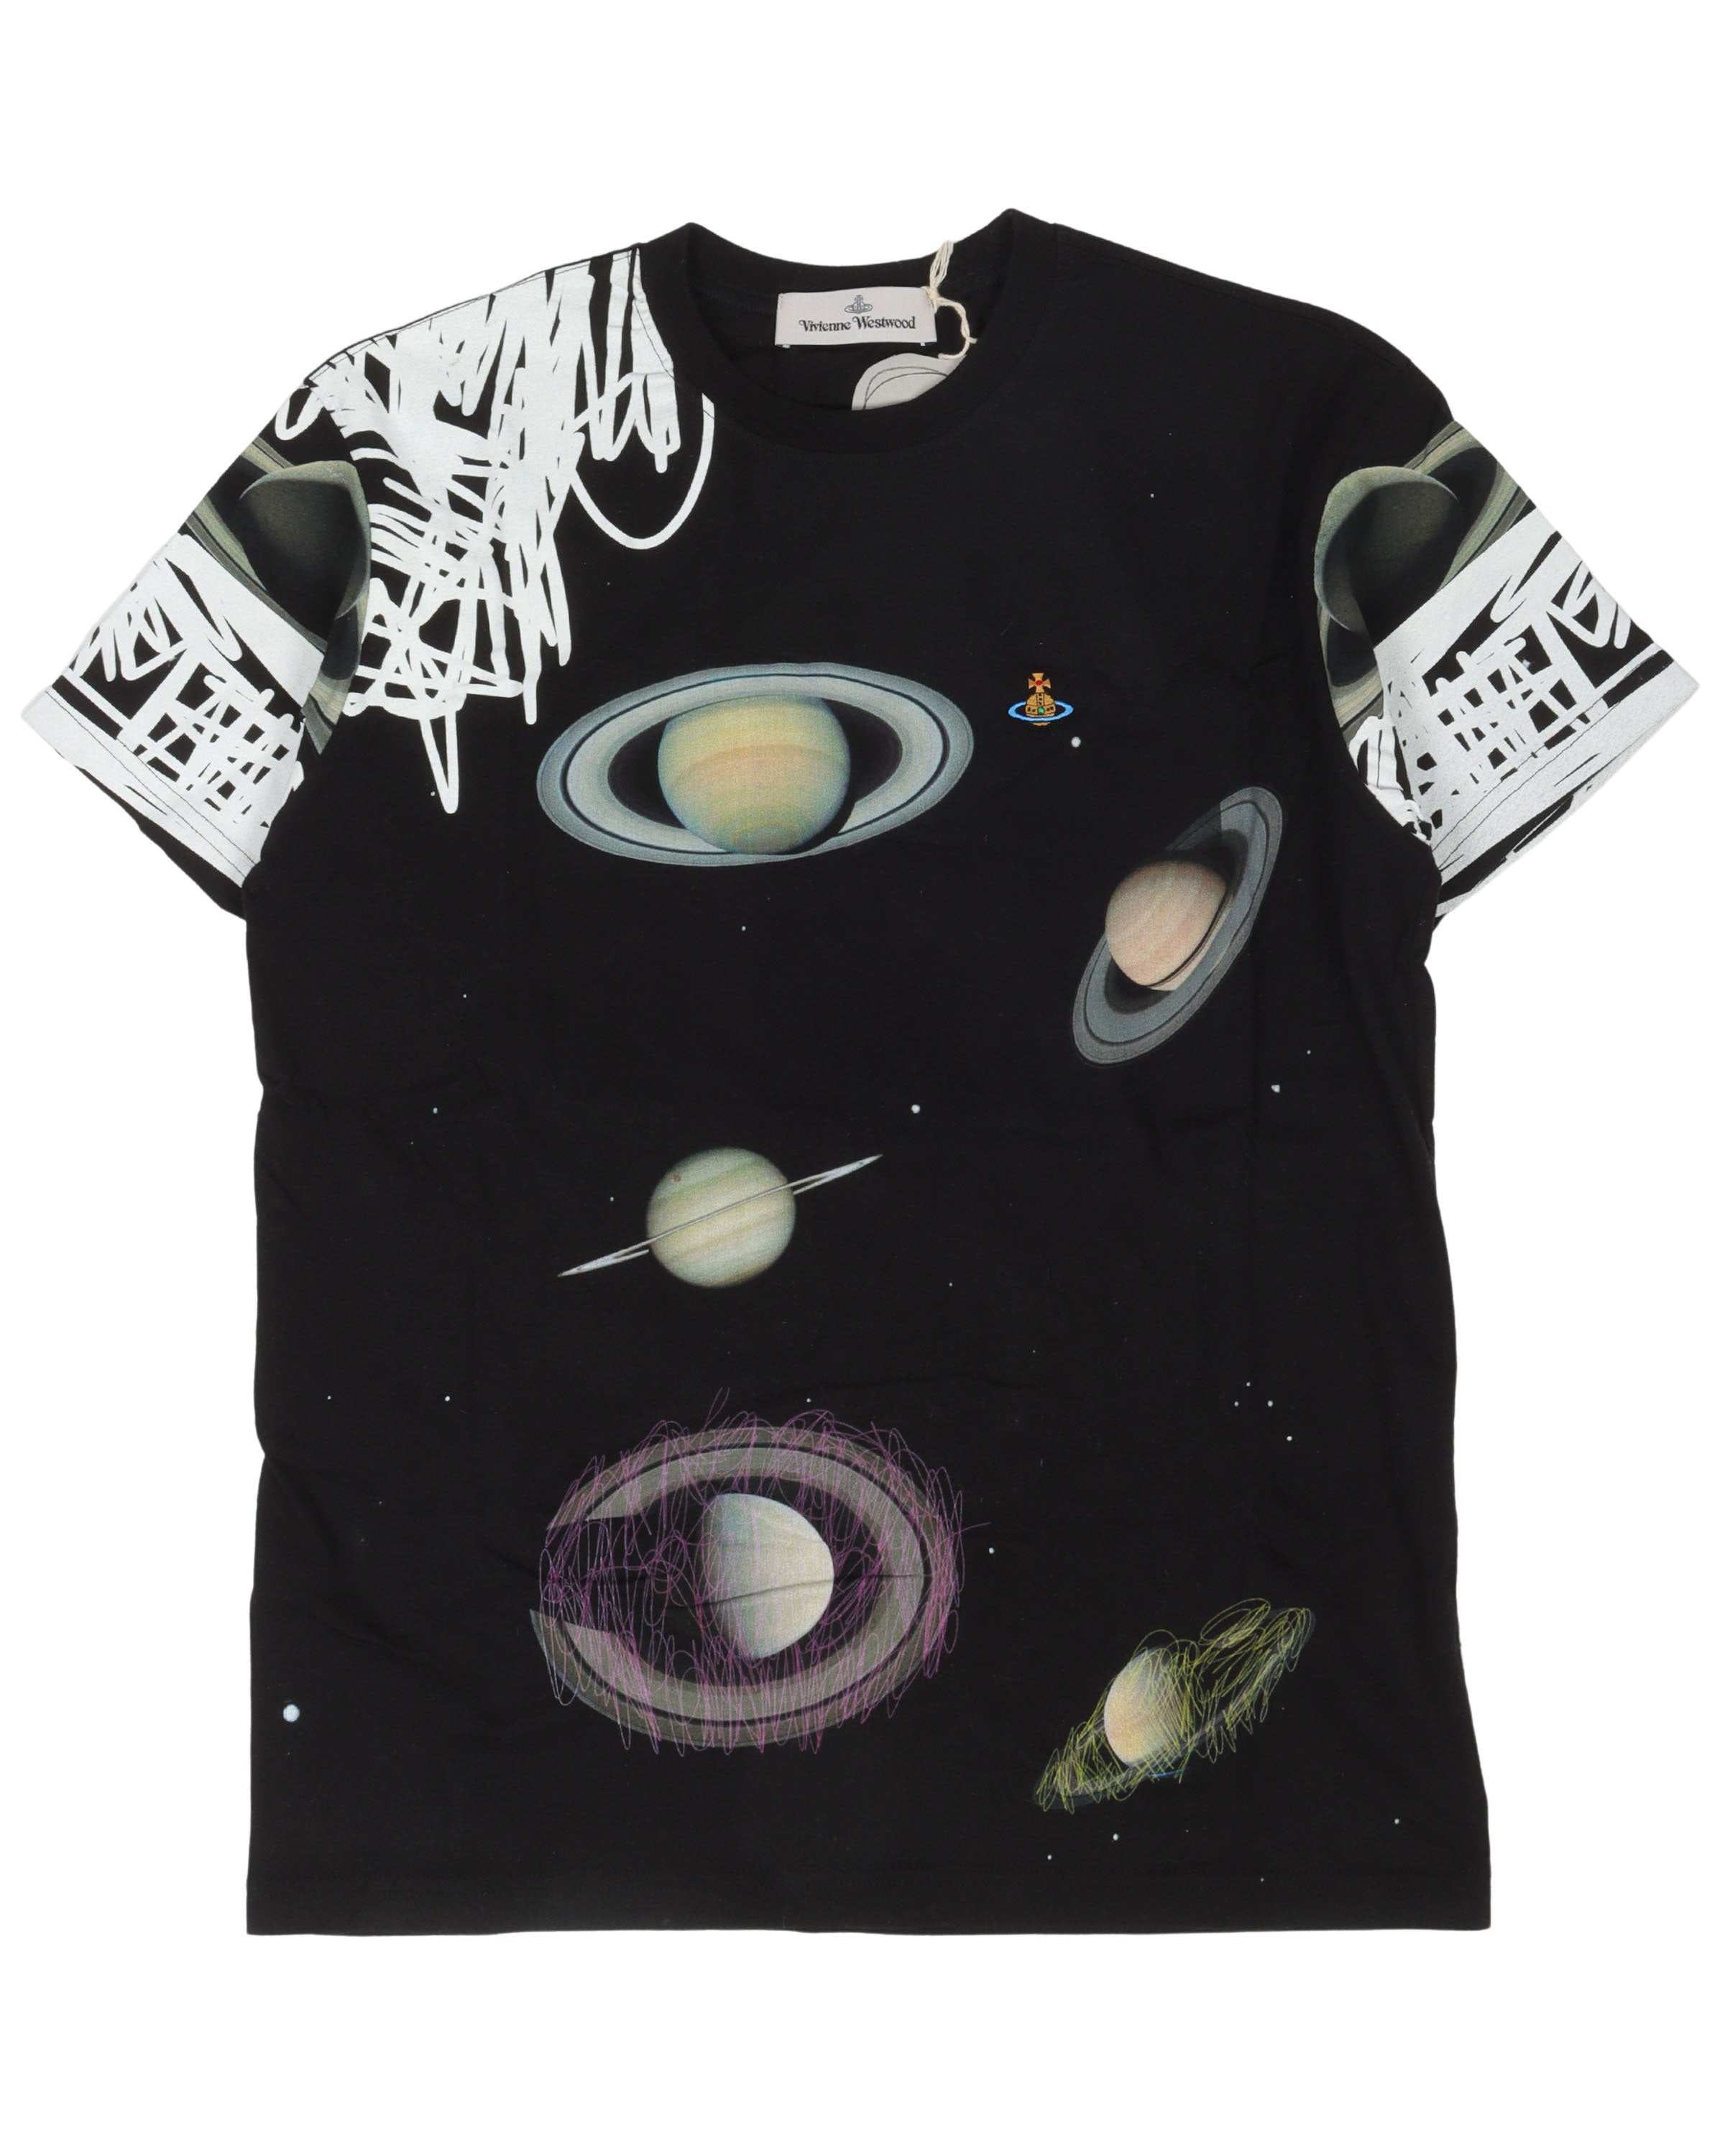 Planets T-Shirt